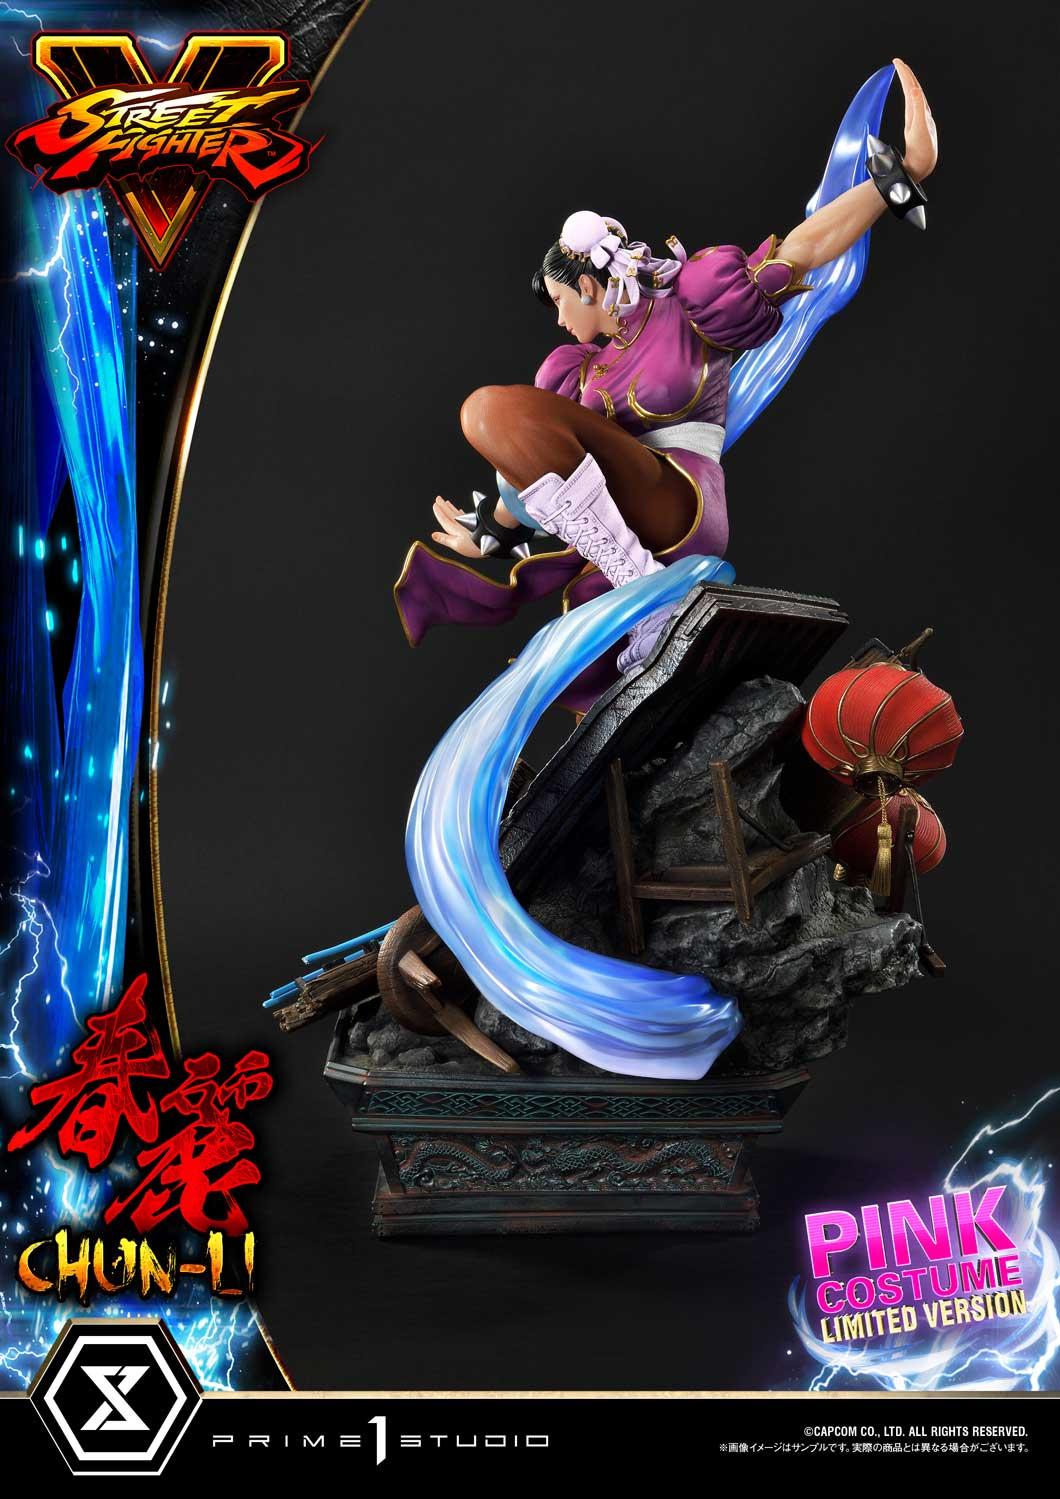 Premium Masterline Street Fighter V Chun-Li Pink Costume Limited Version